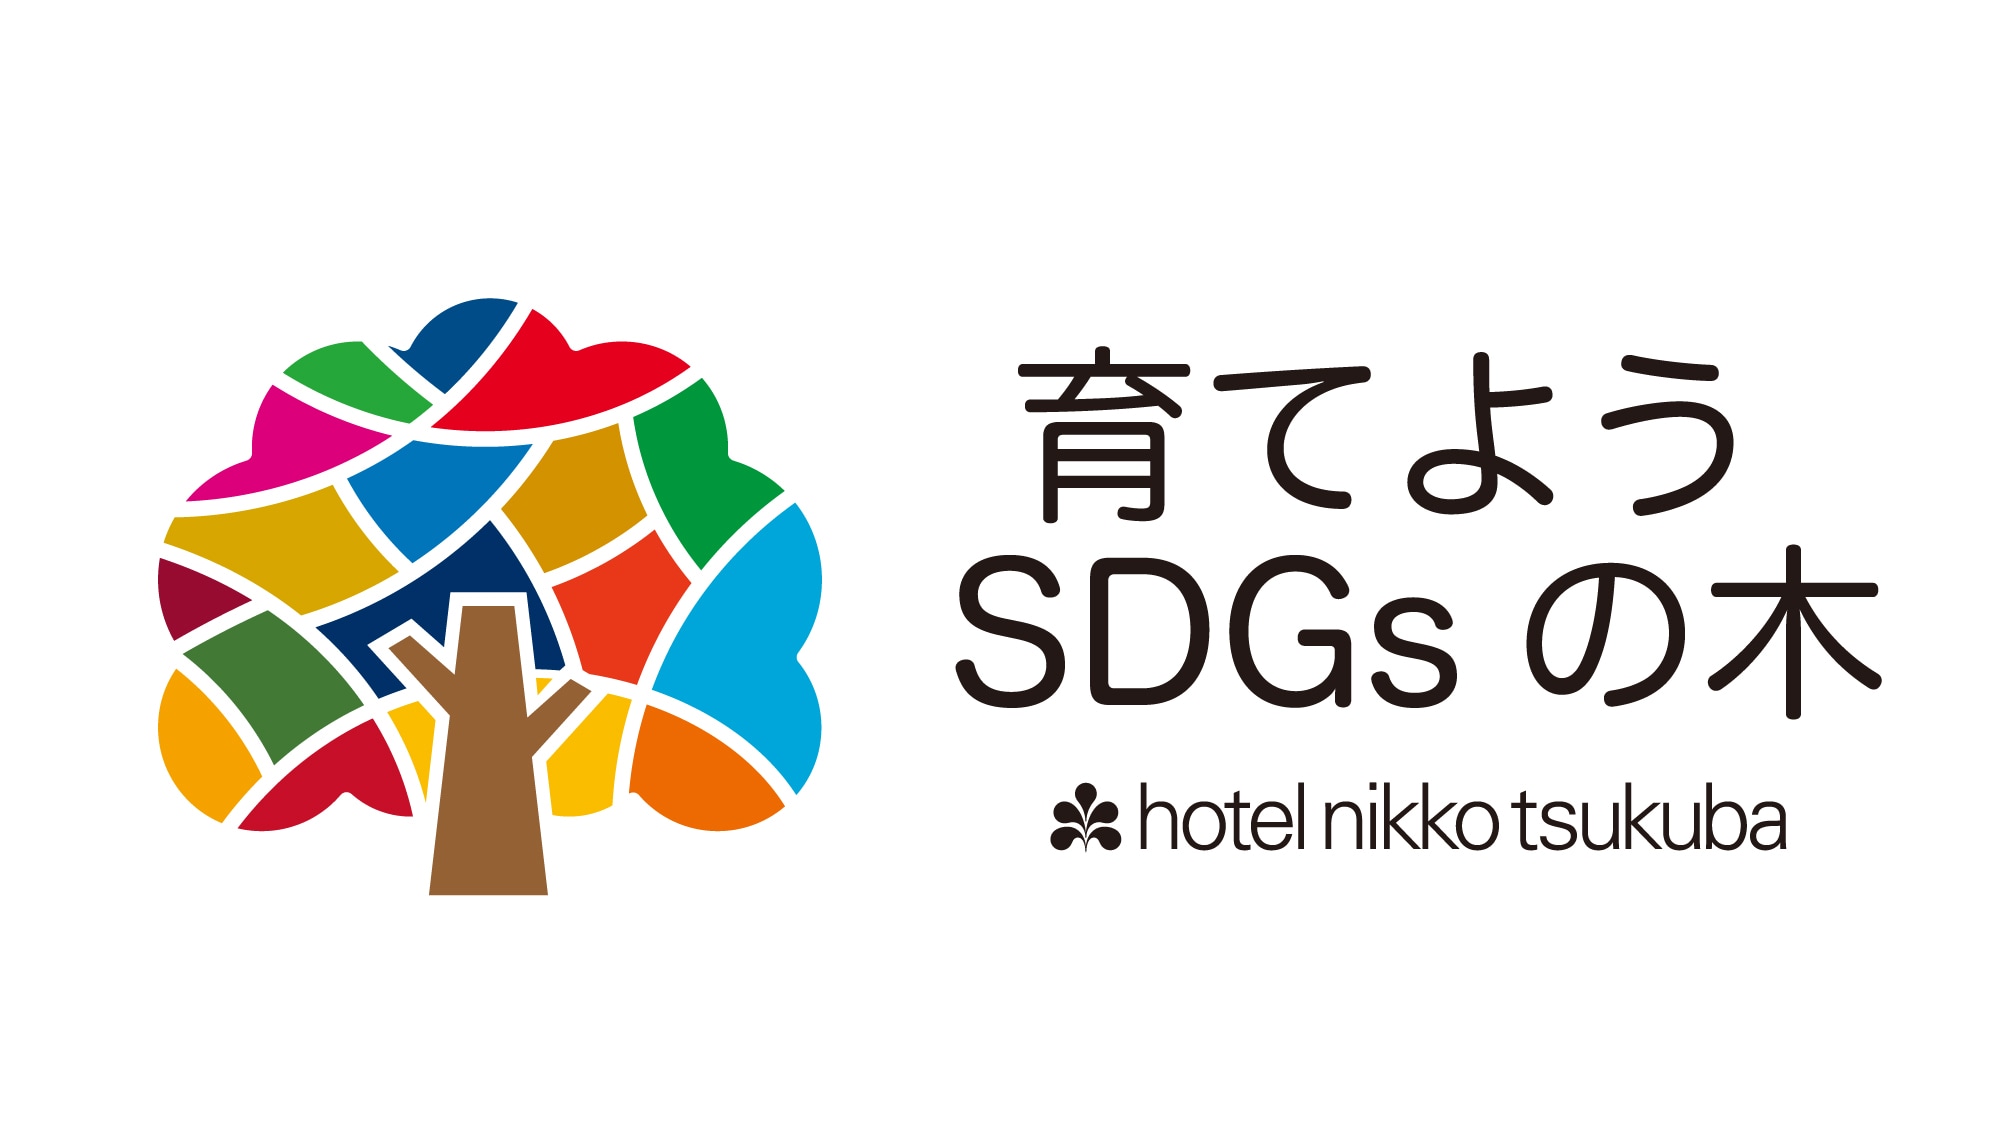 Hotel Nikko Tsukuba supports the activities of the SDGs